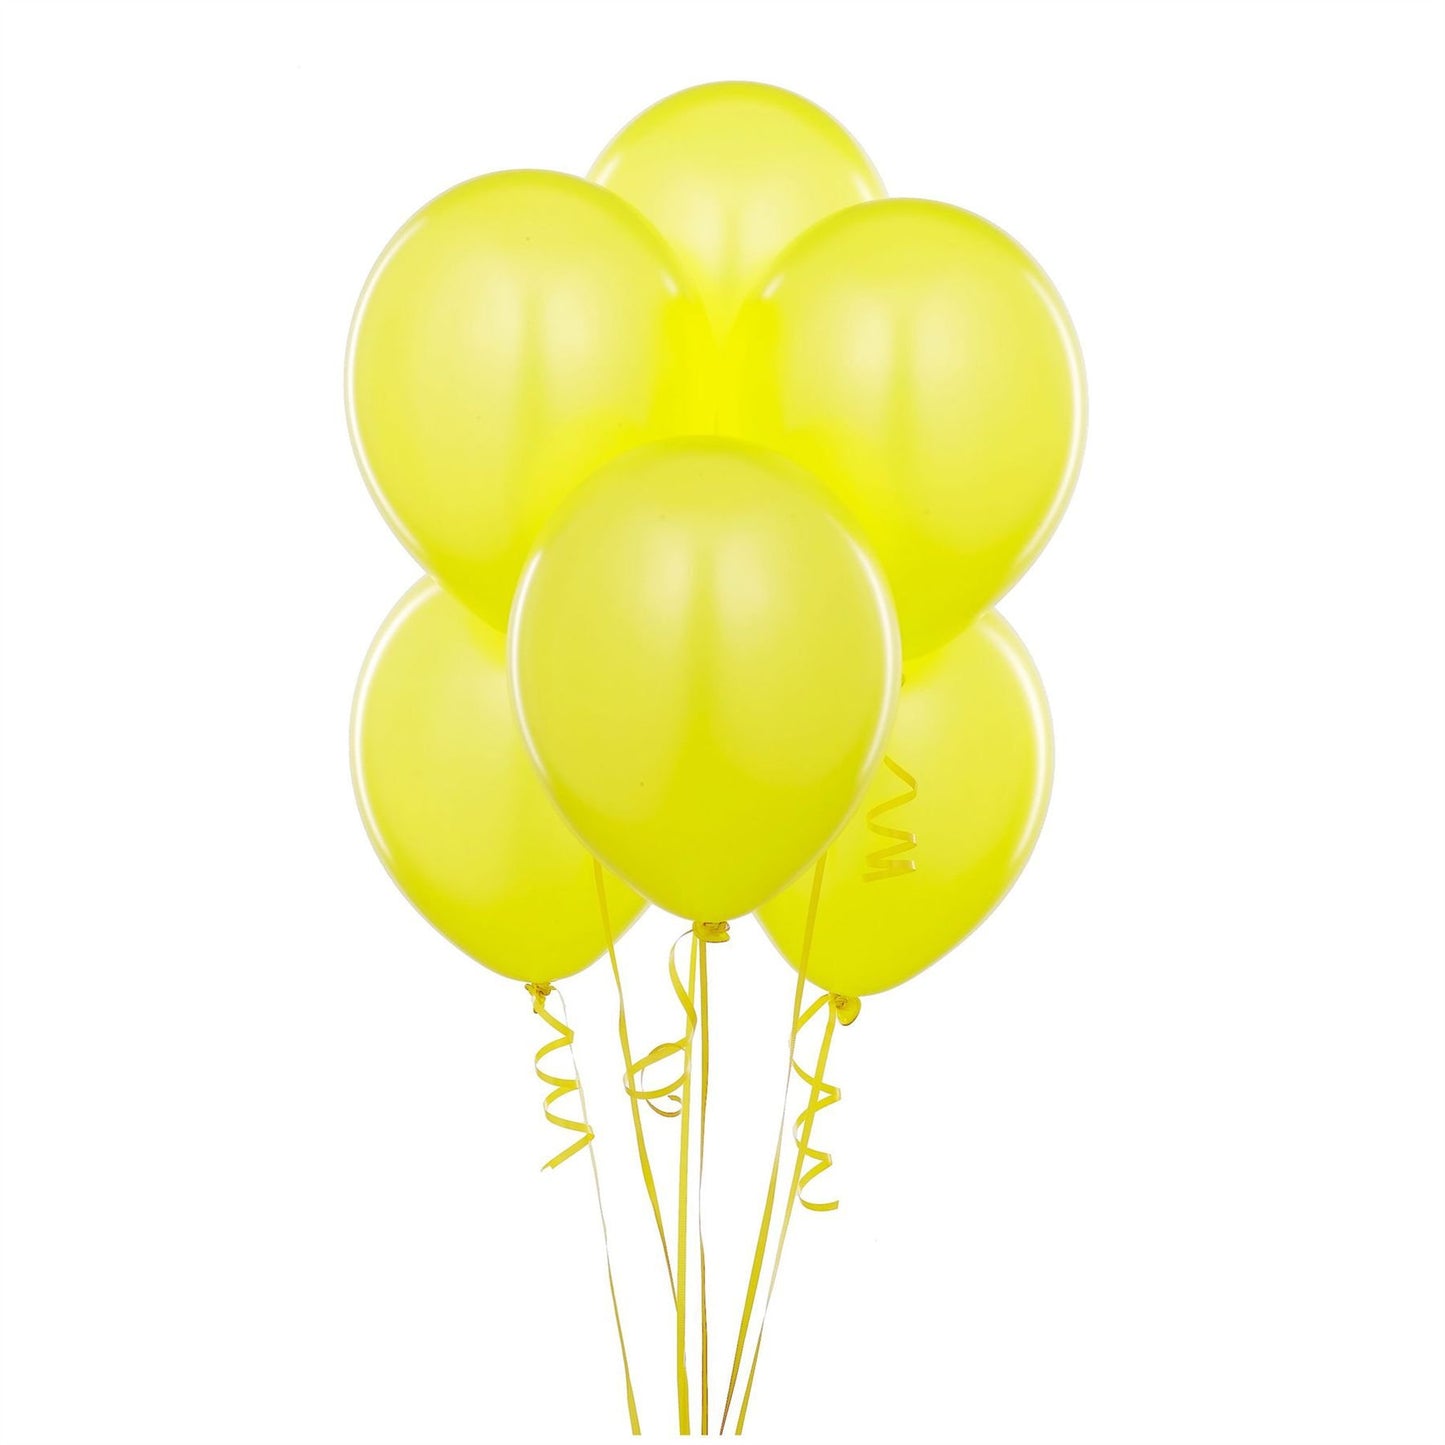 SHATCHI 12" Standard Latex Air/Helium Metallic Yellow birthday Wedding Party Balloons Plain 5 Pcs